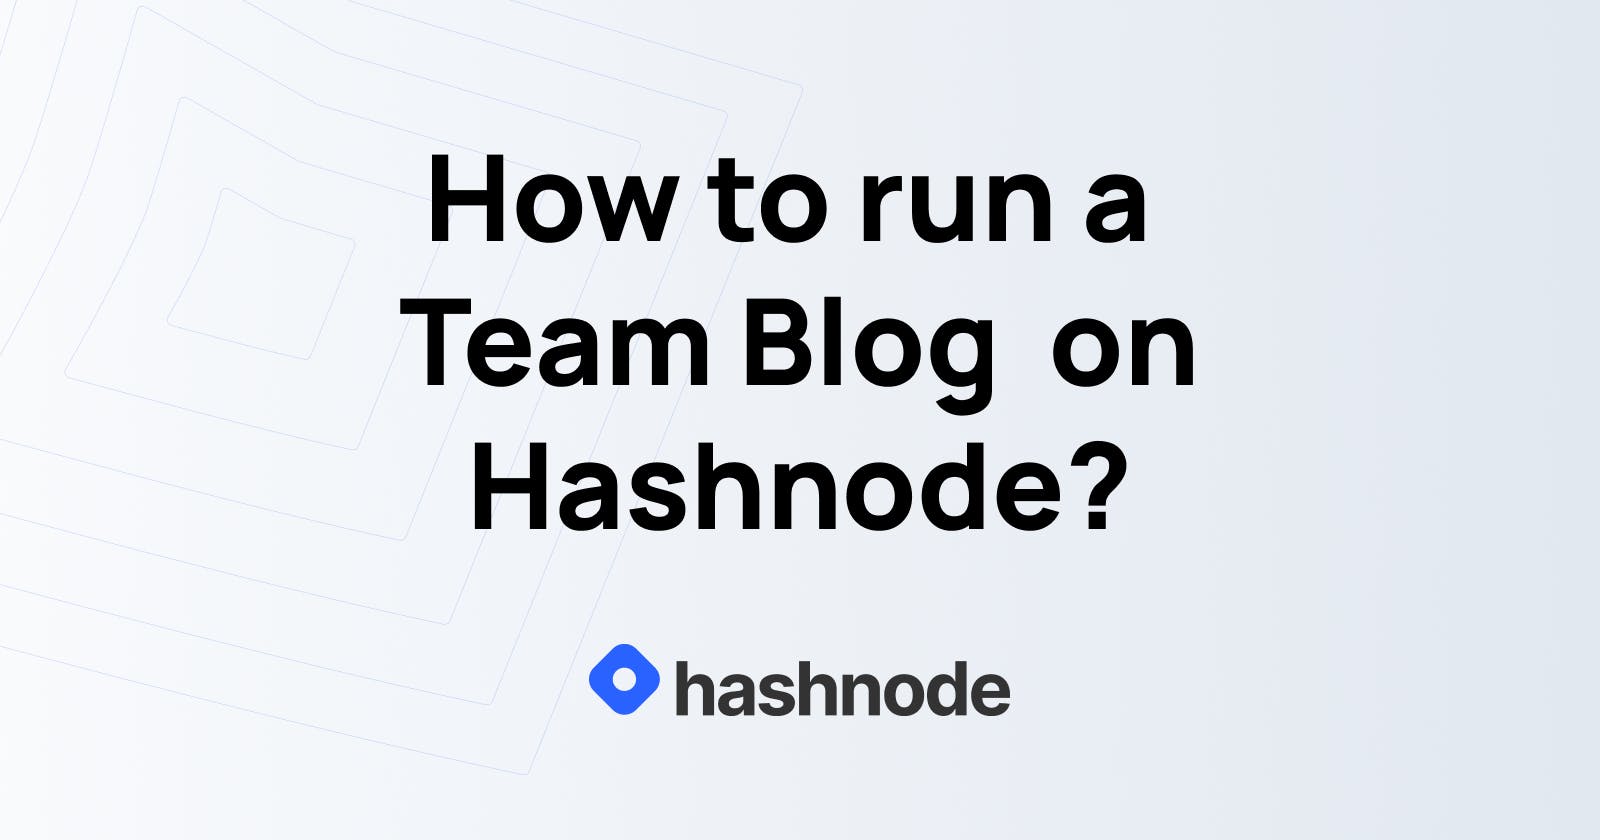 How to run a team blog on Hashnode